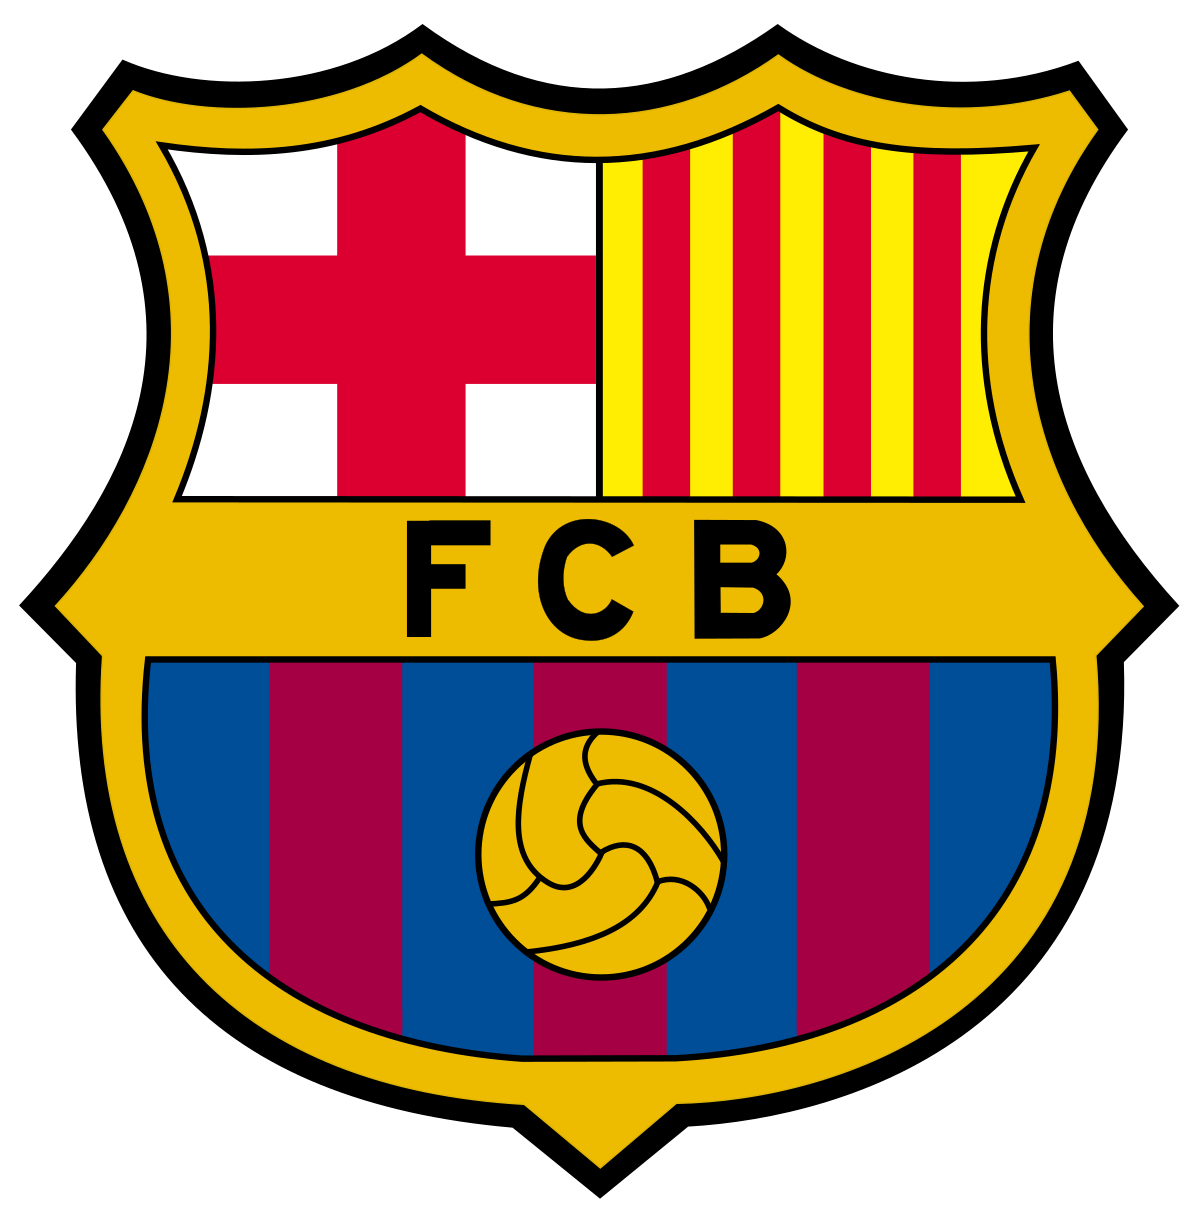 FC Barcelona - Wikipedia bahasa Indonesia, ensiklopedia bebas